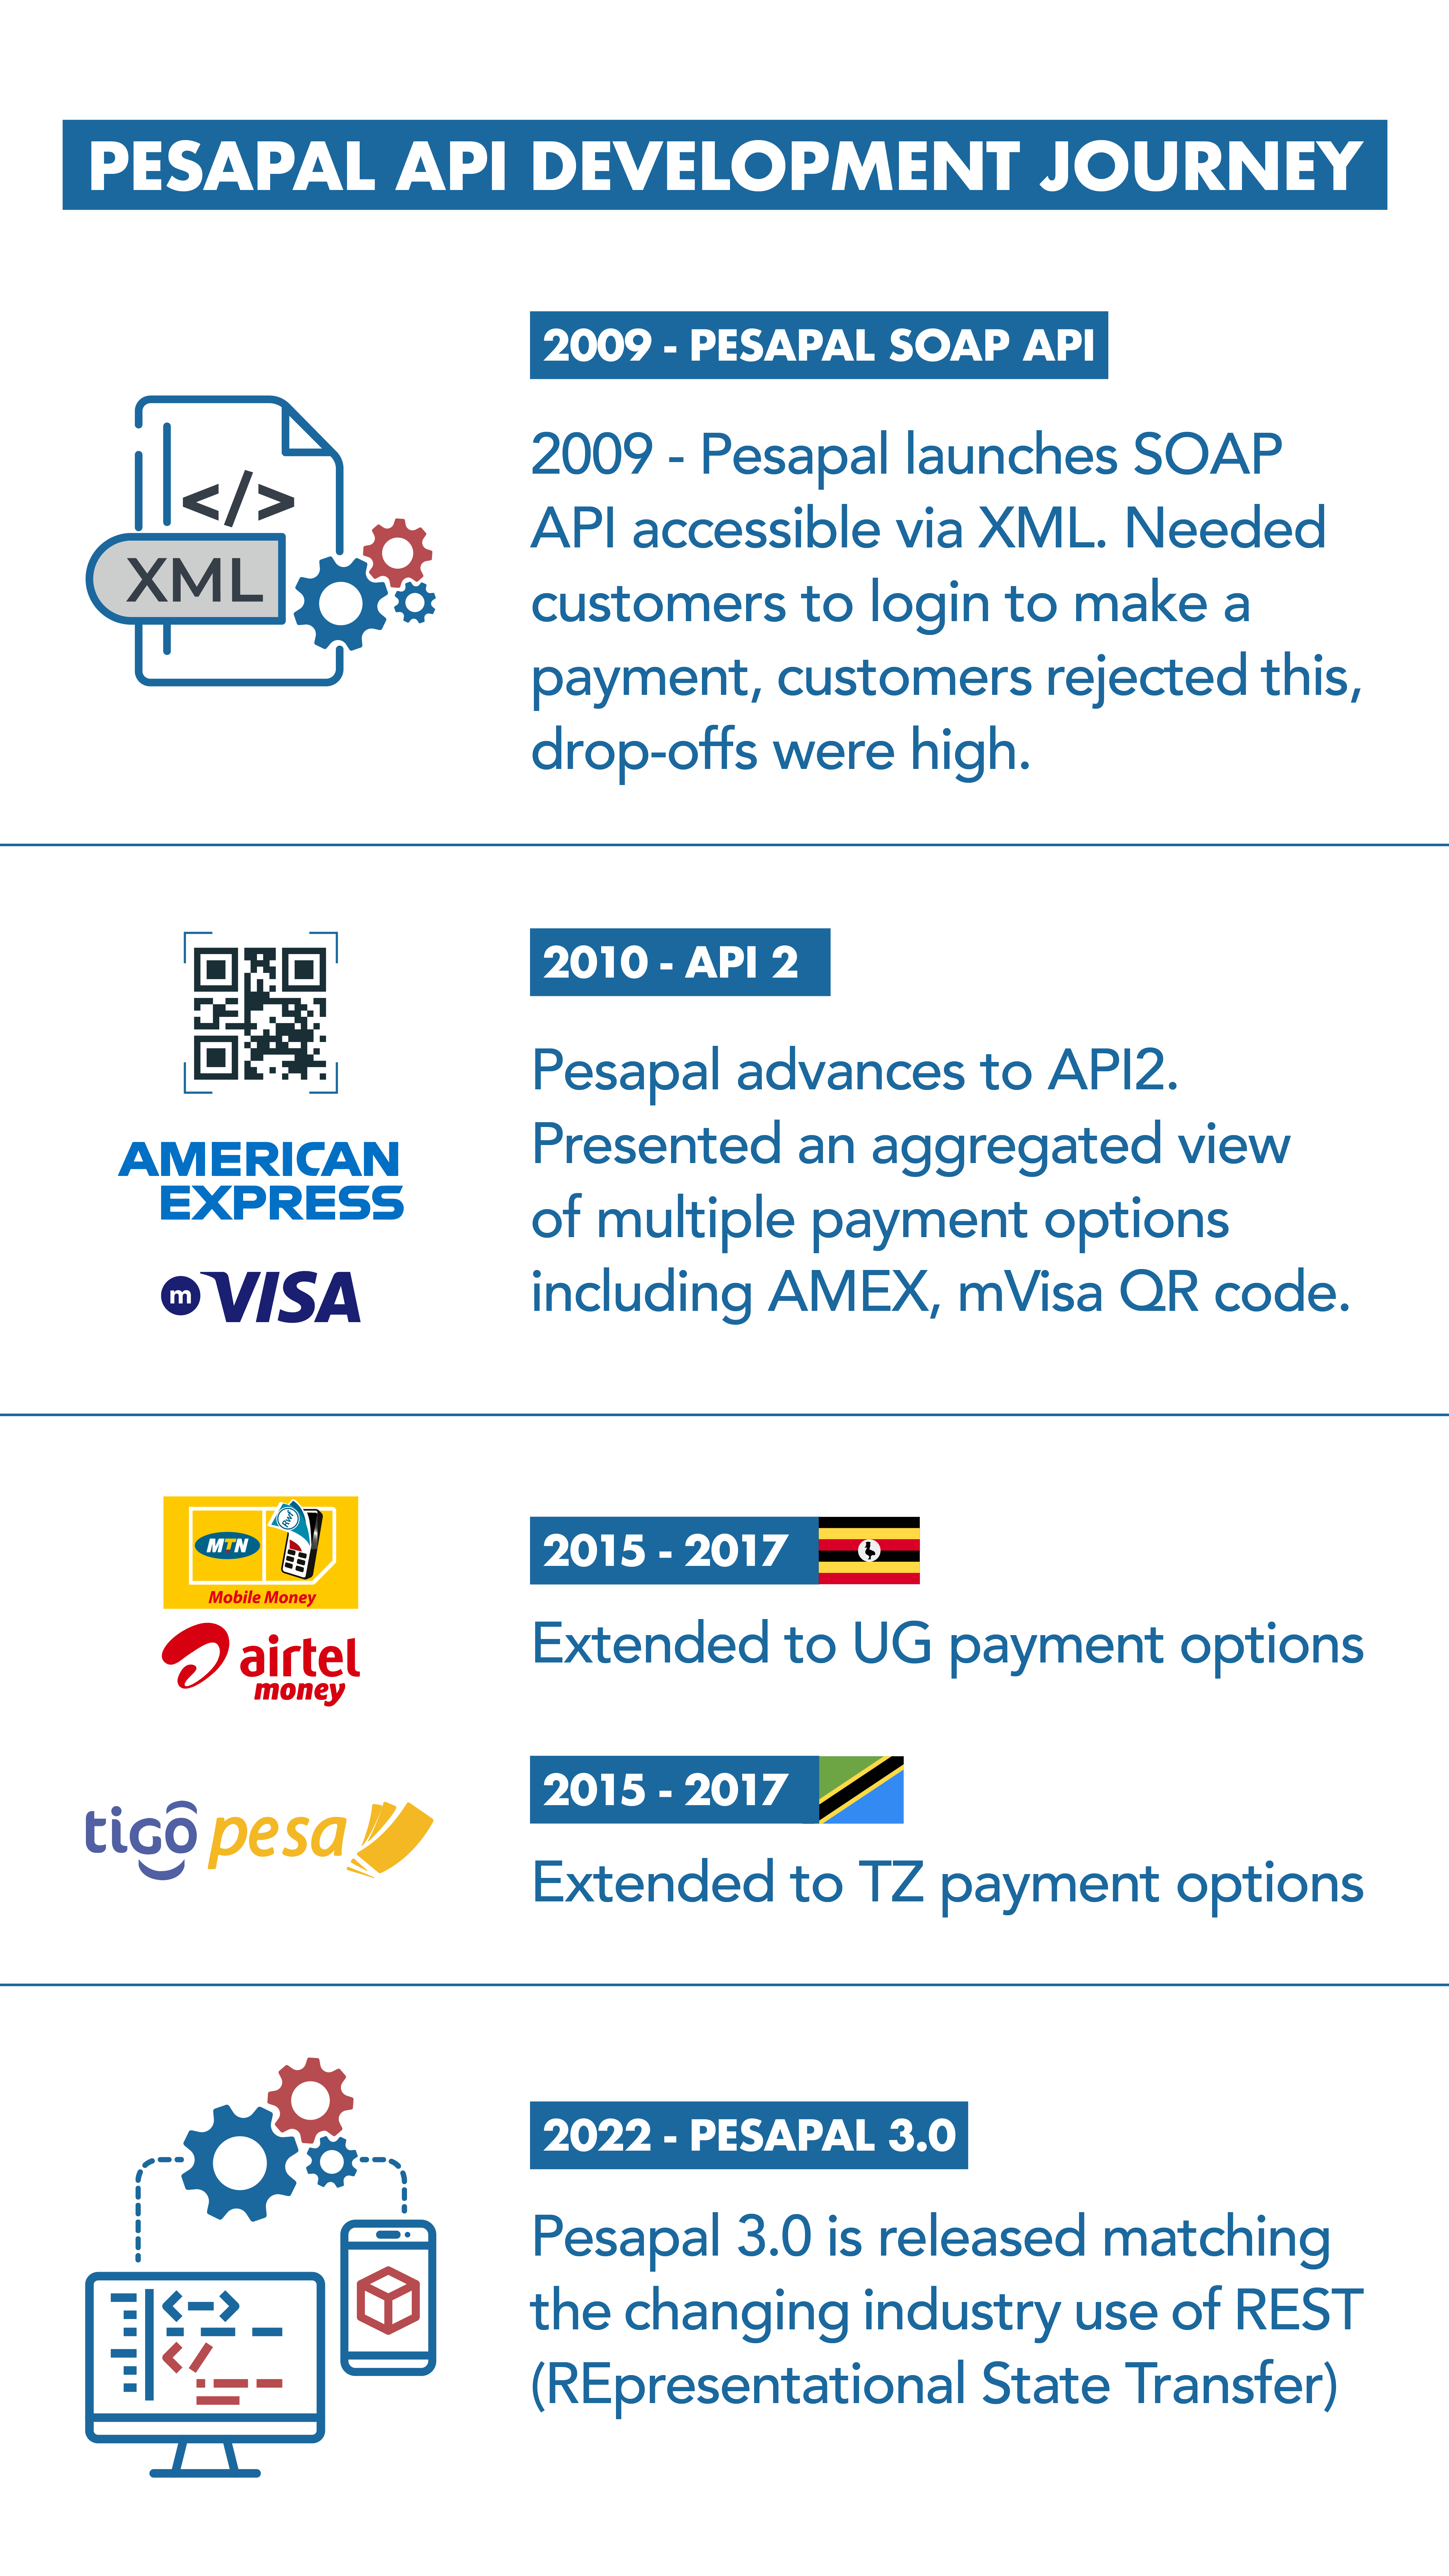 Pesapal API Development Journey